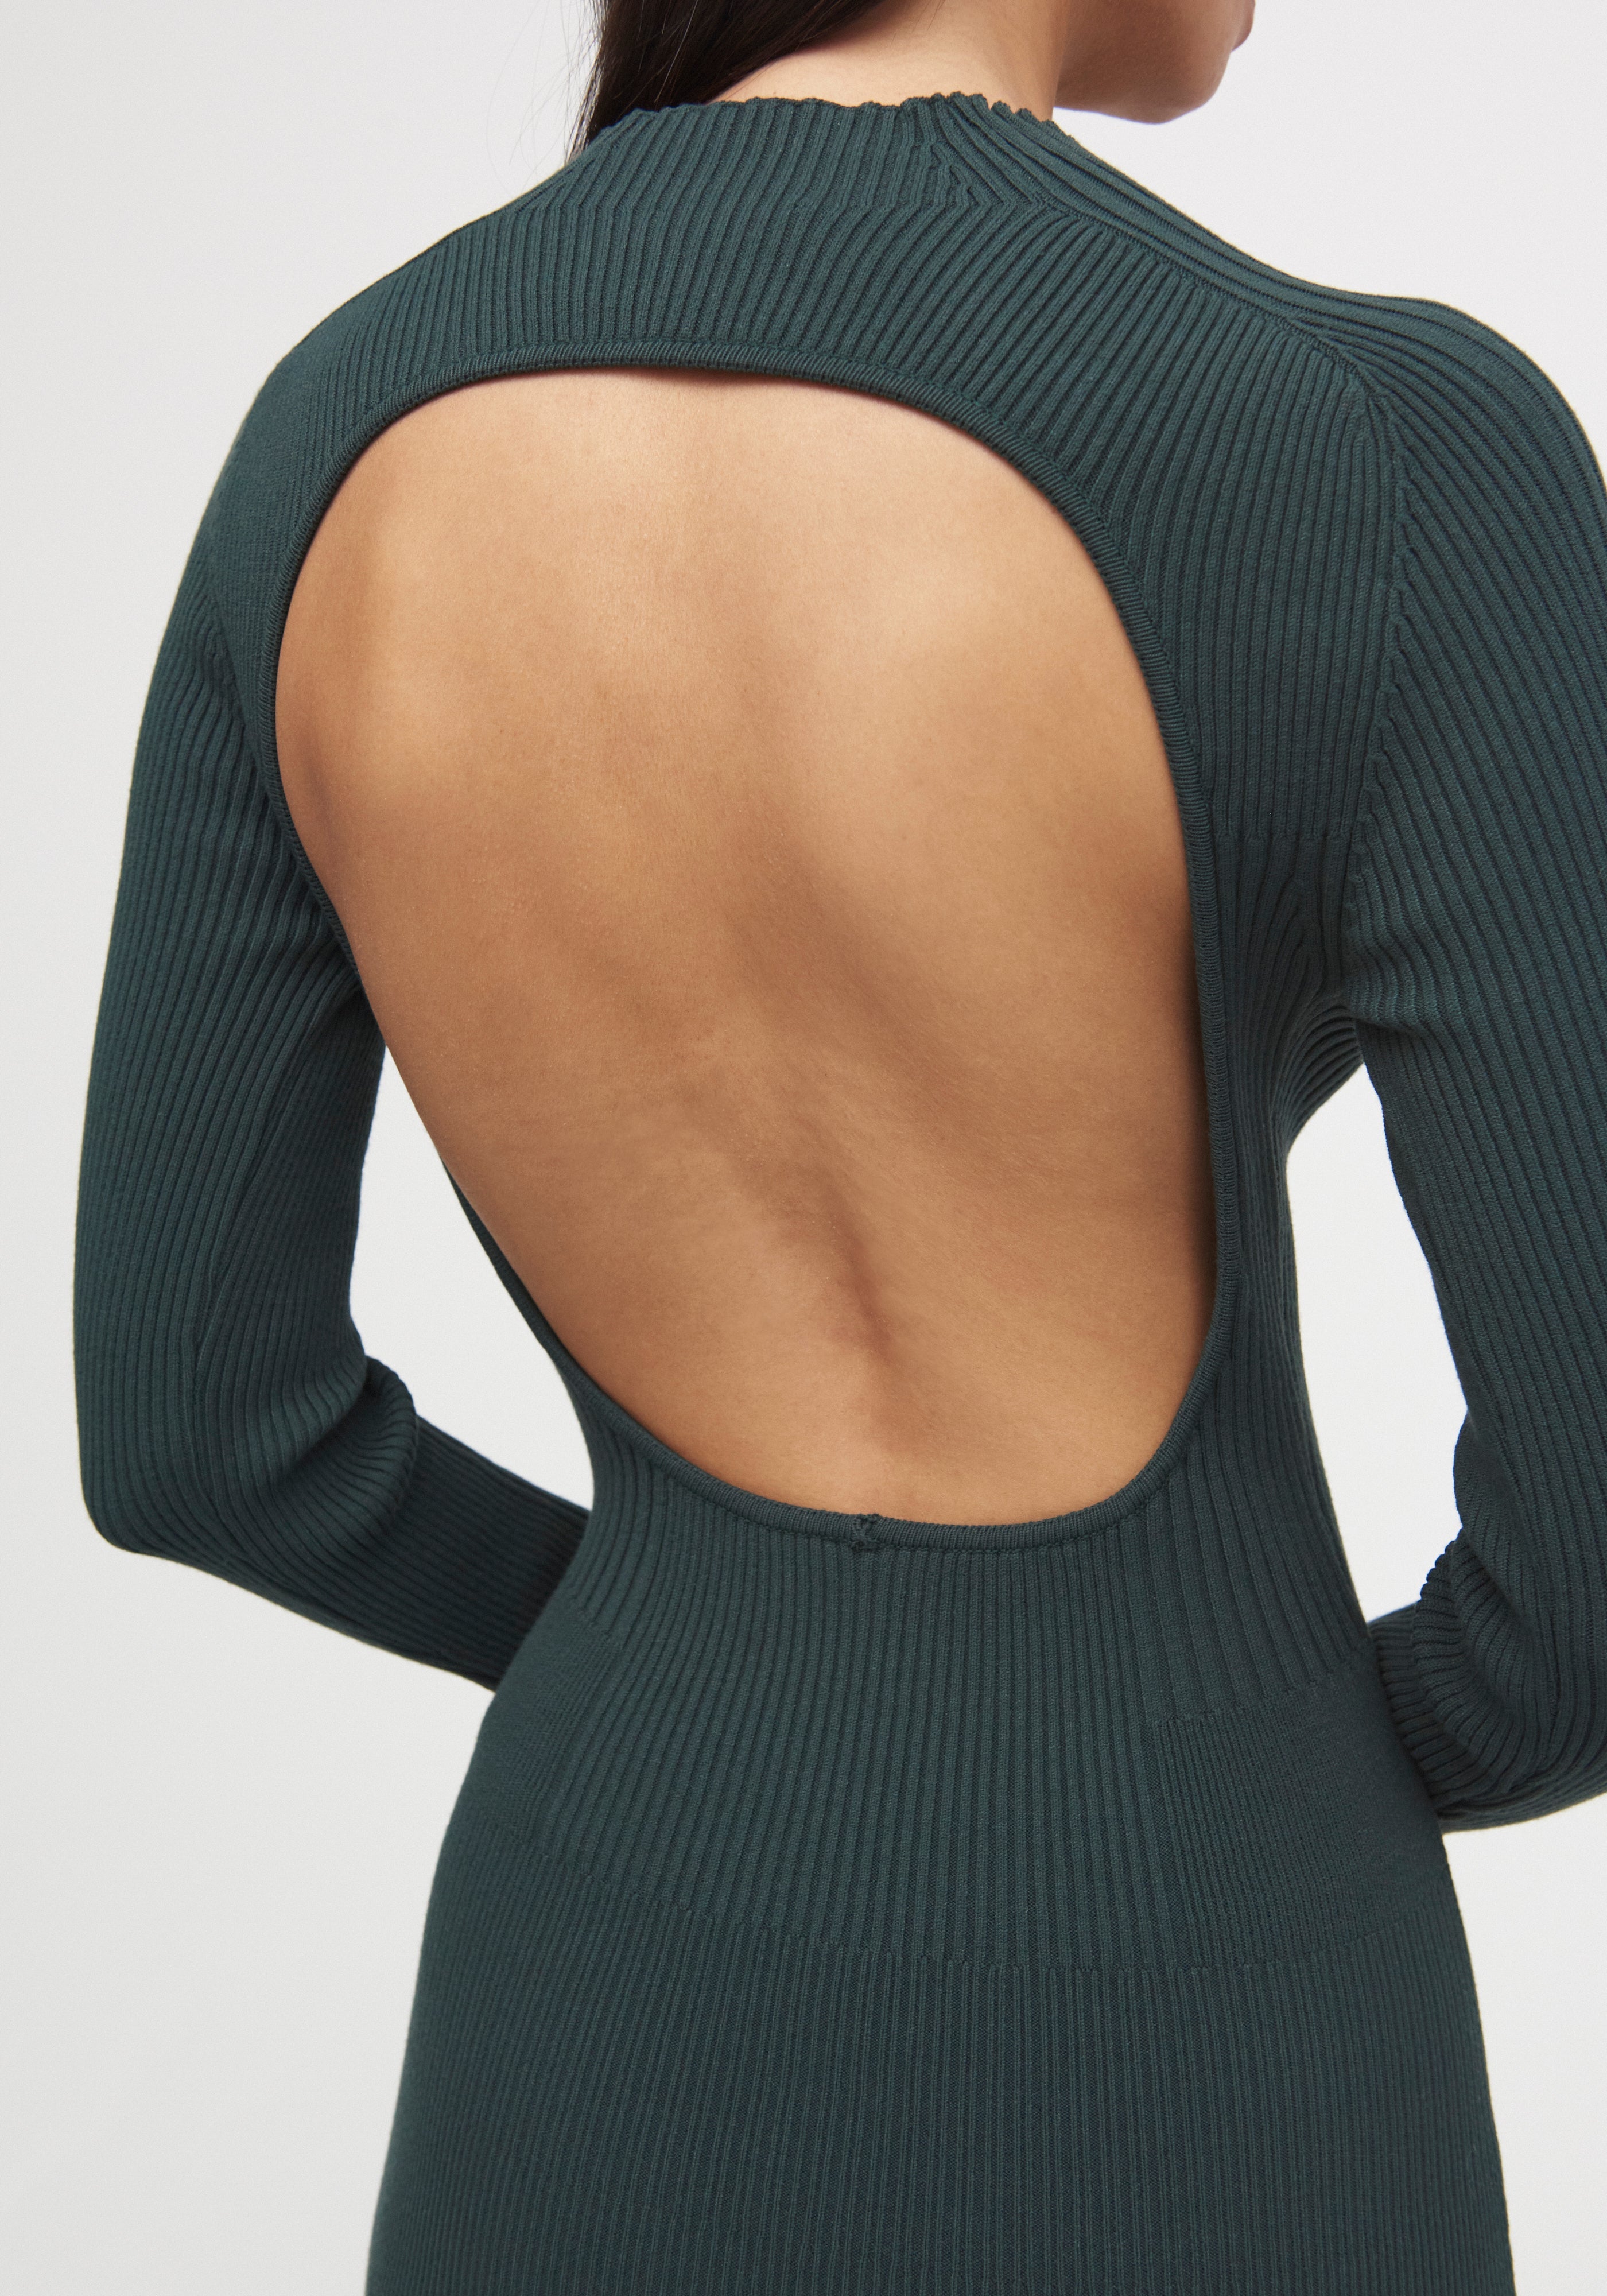 AERON LARA ECO STRETCH Cut-out back dress – emerald